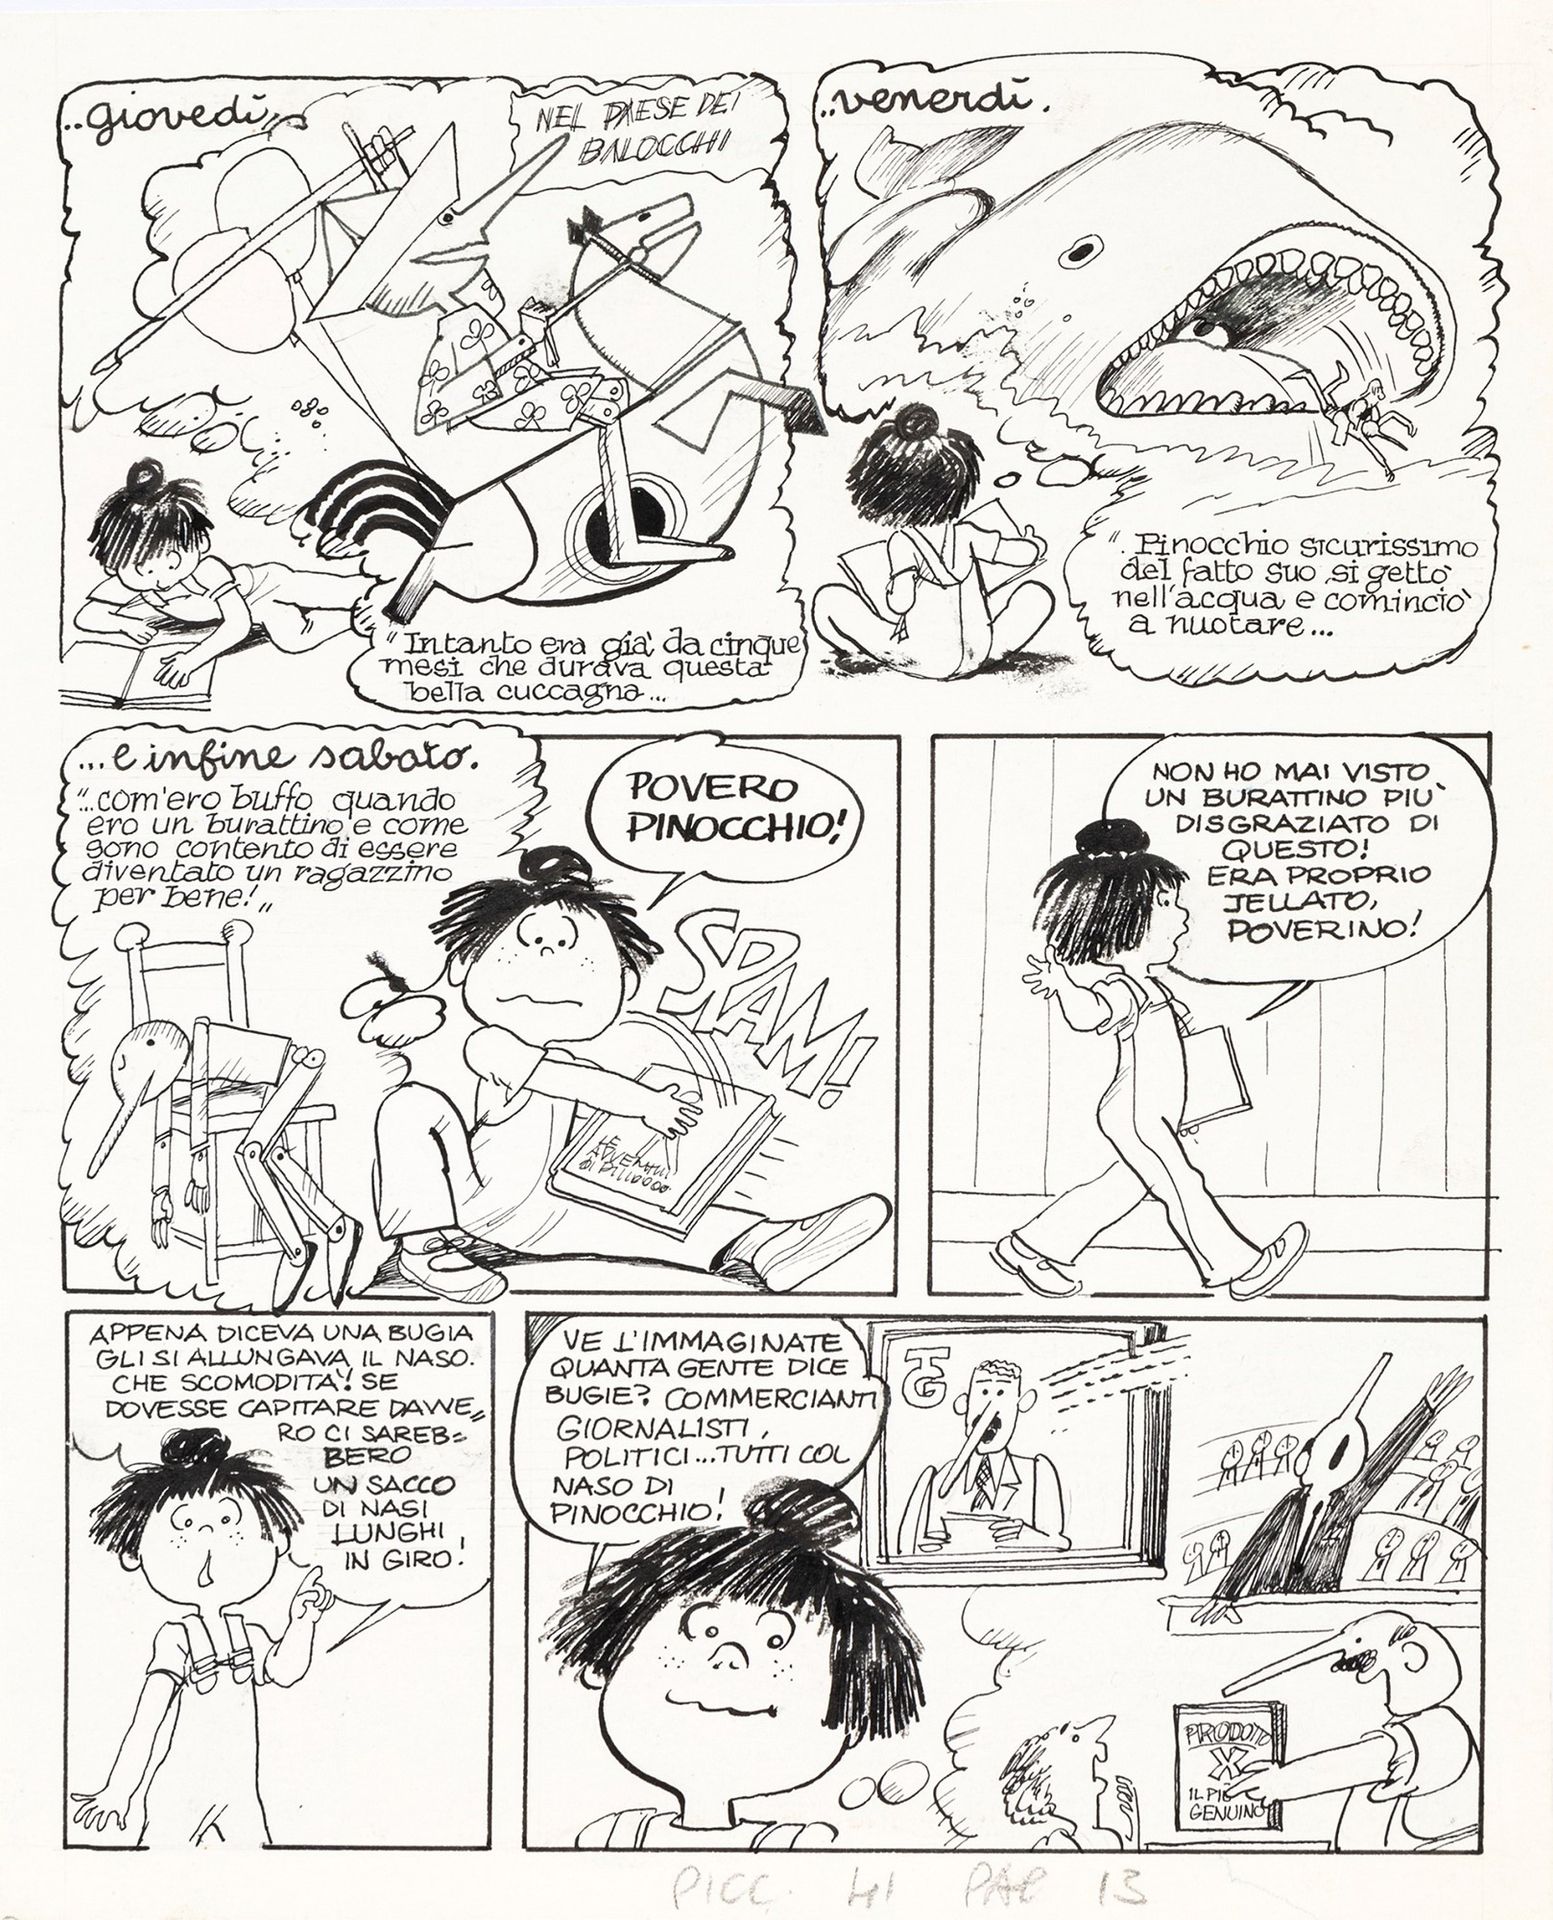 Grazia Nidasio Stefi: leggere Pinocchio, 1981

pencil and ink on thin cardboard
&hellip;